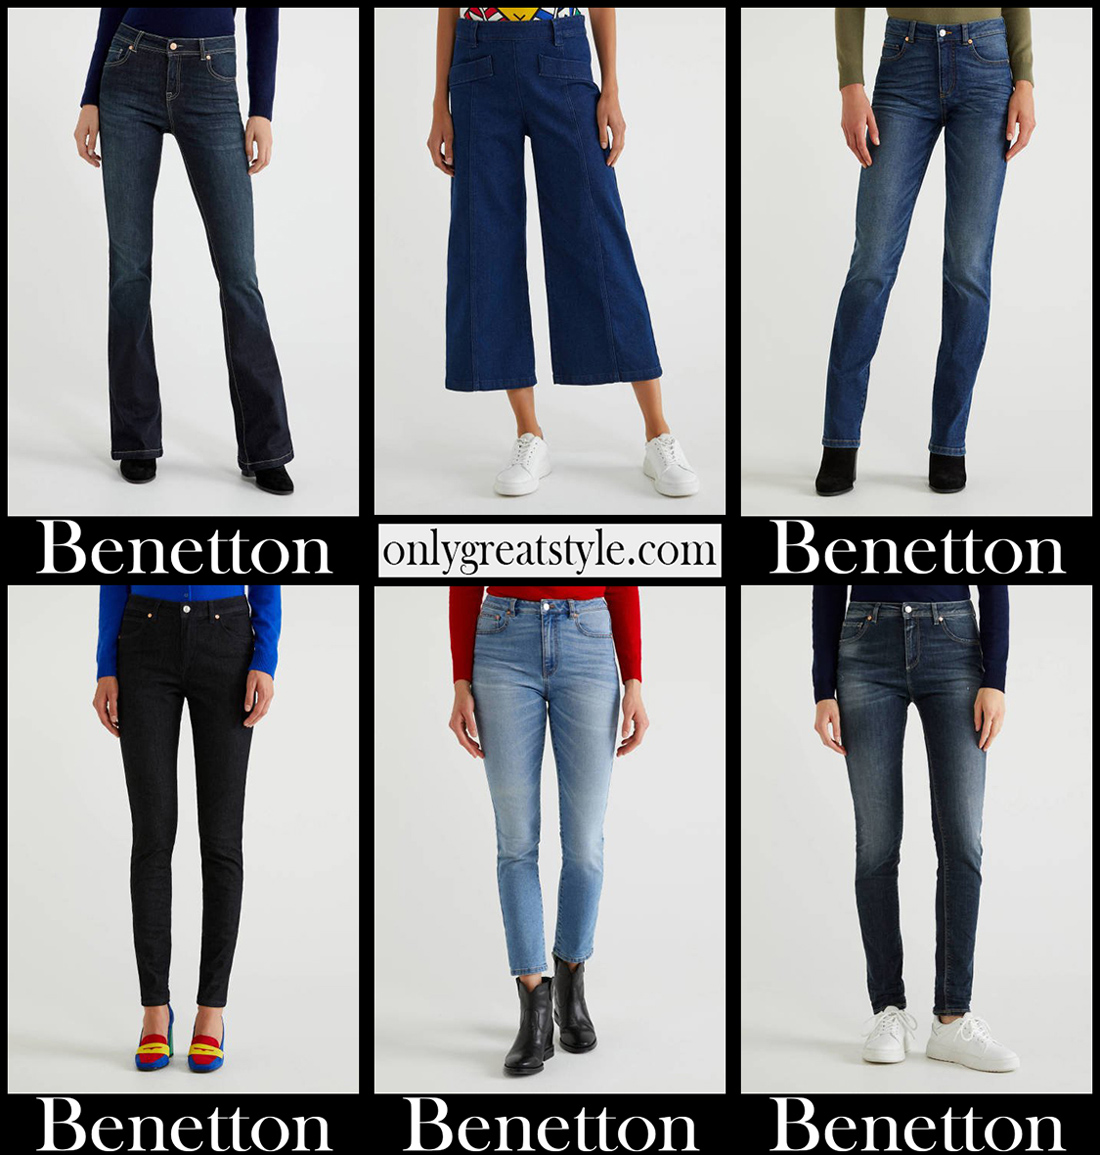 Benetton jeans 2021 new arrivals womens clothing denim